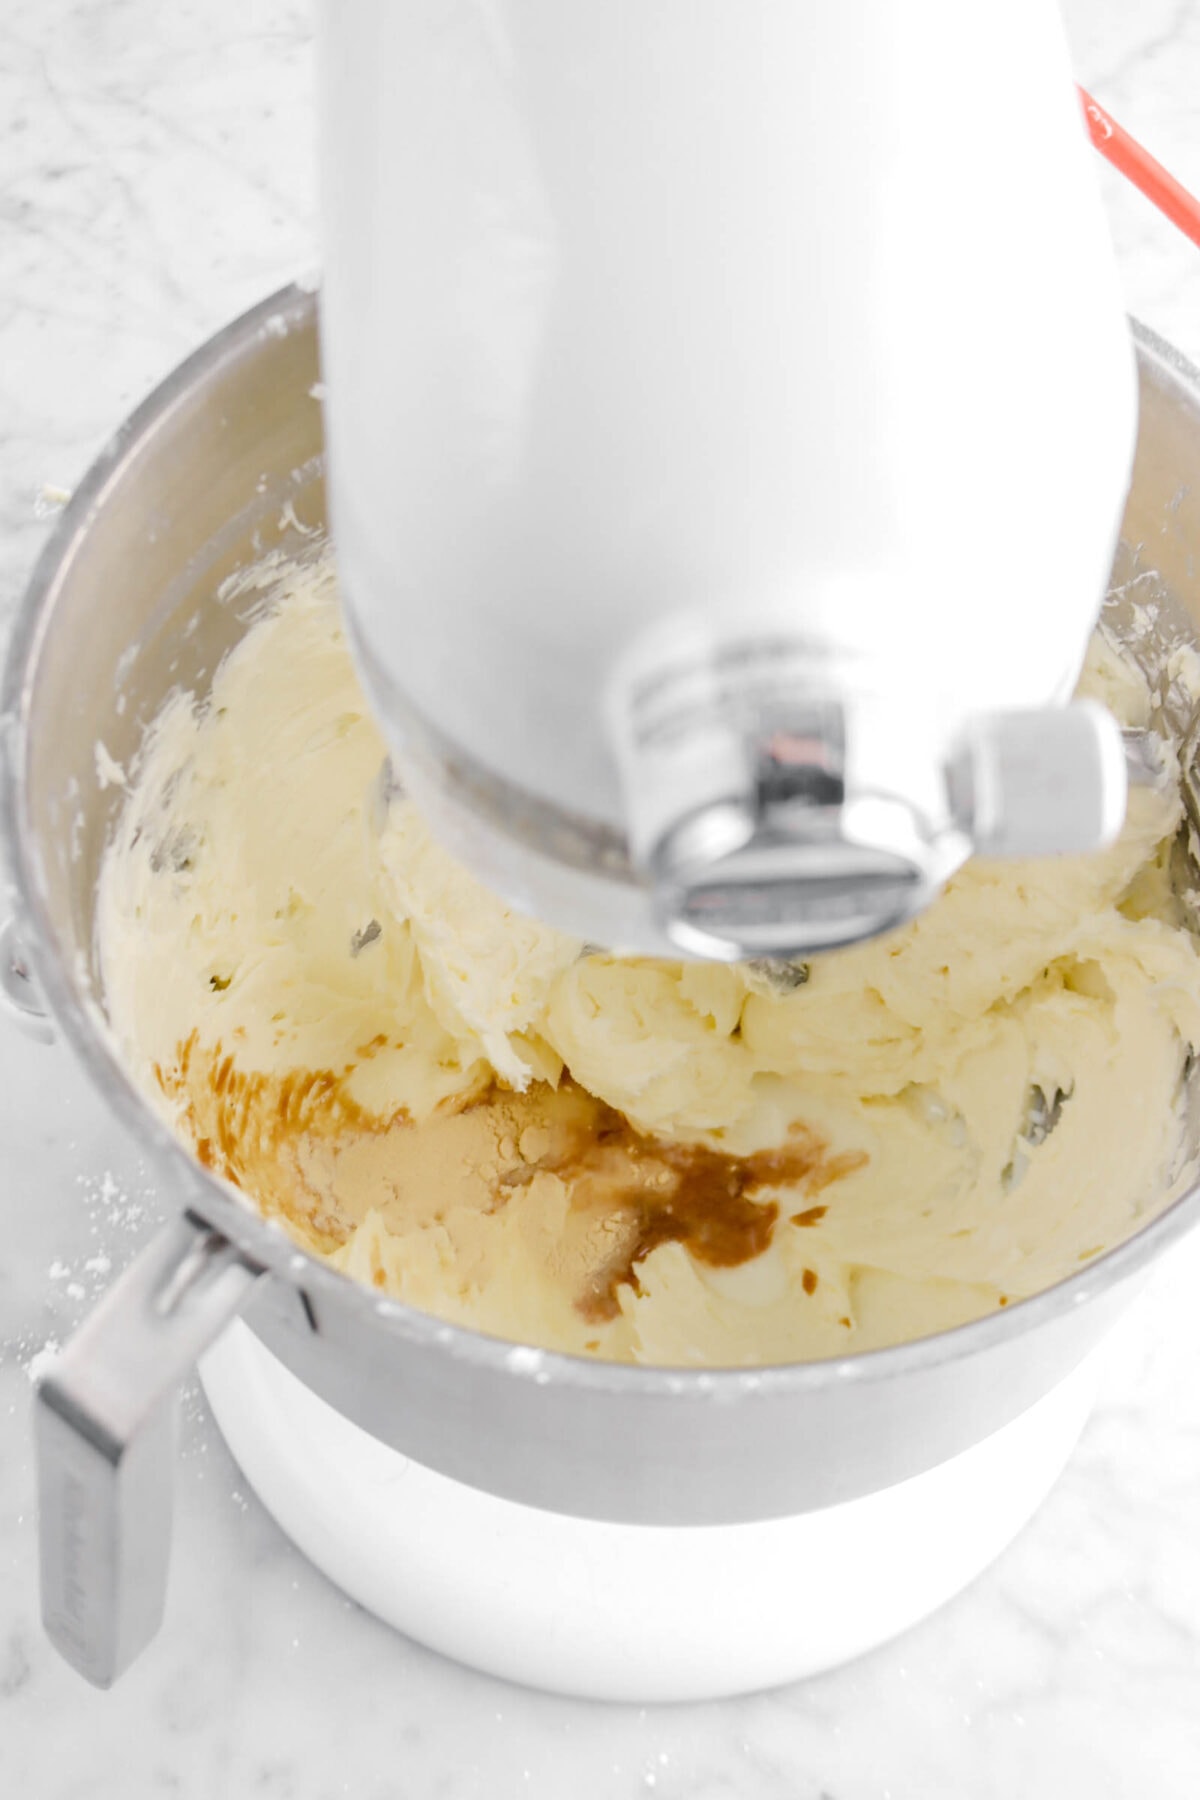 vanilla, heavy cream, and malt powder added to butter and powdered sugar mixture